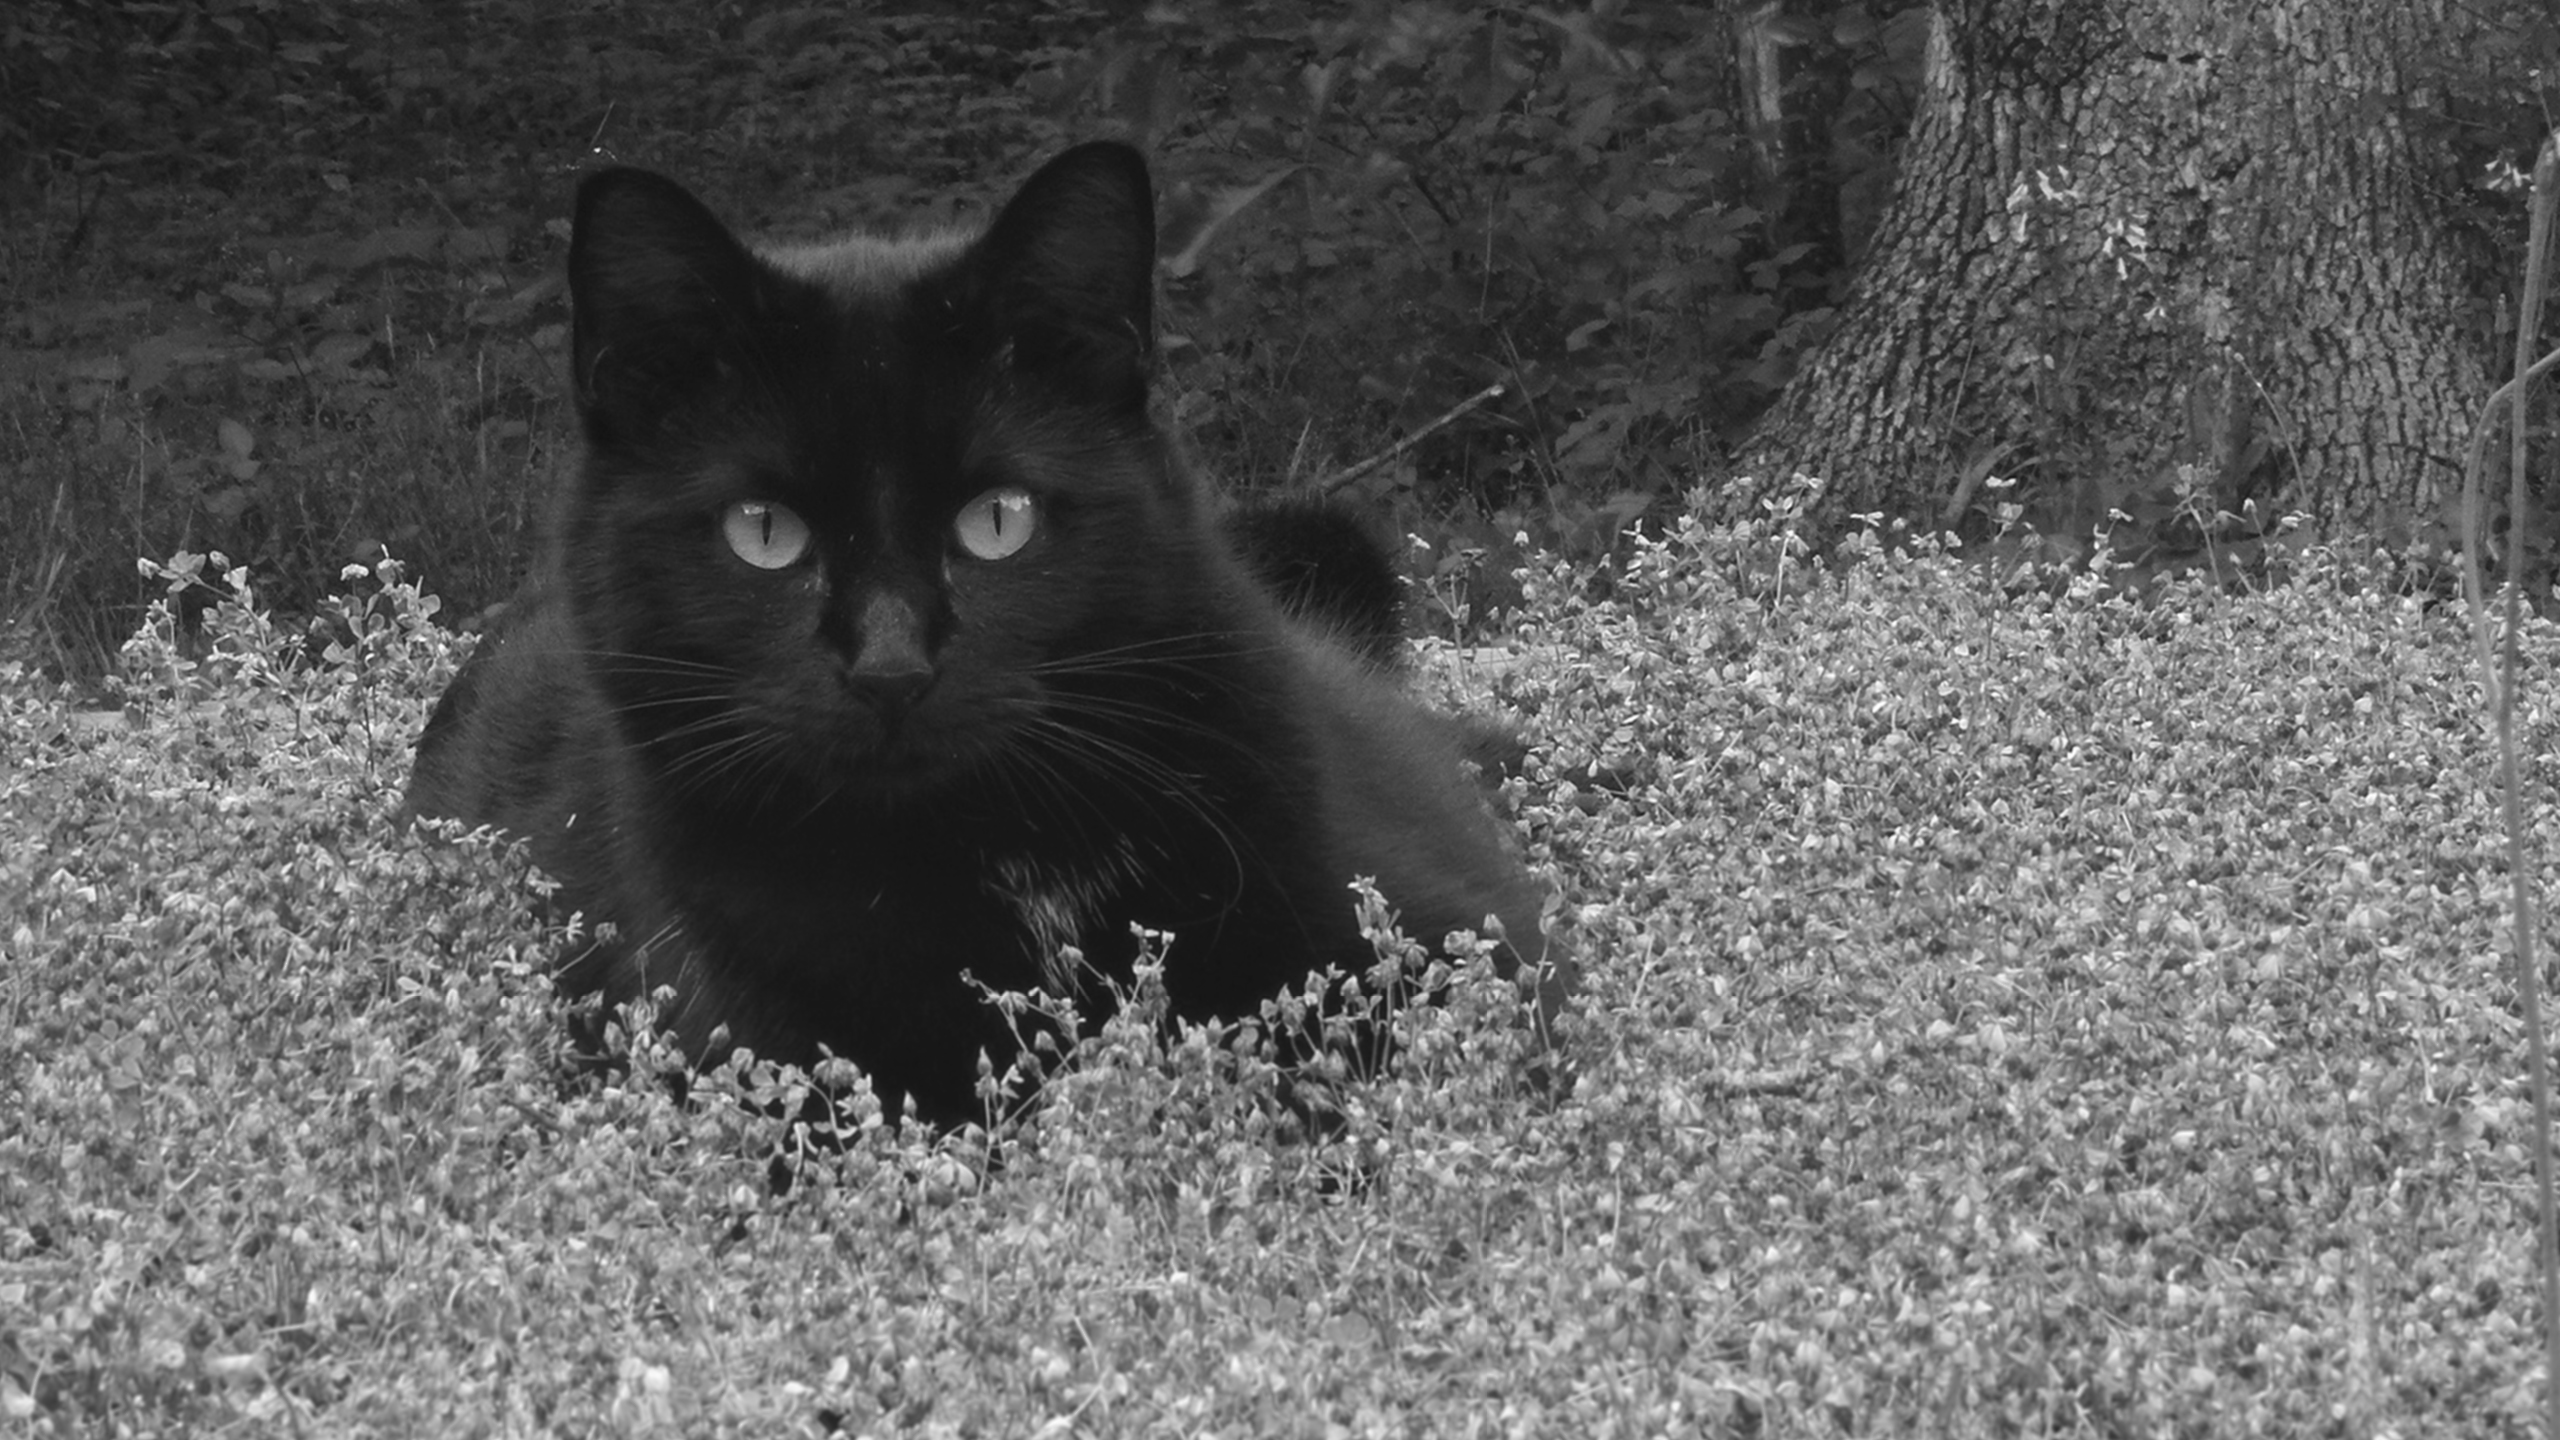 General 2560x1440 monochrome grass feline cats mammals animals black cats outdoors nature